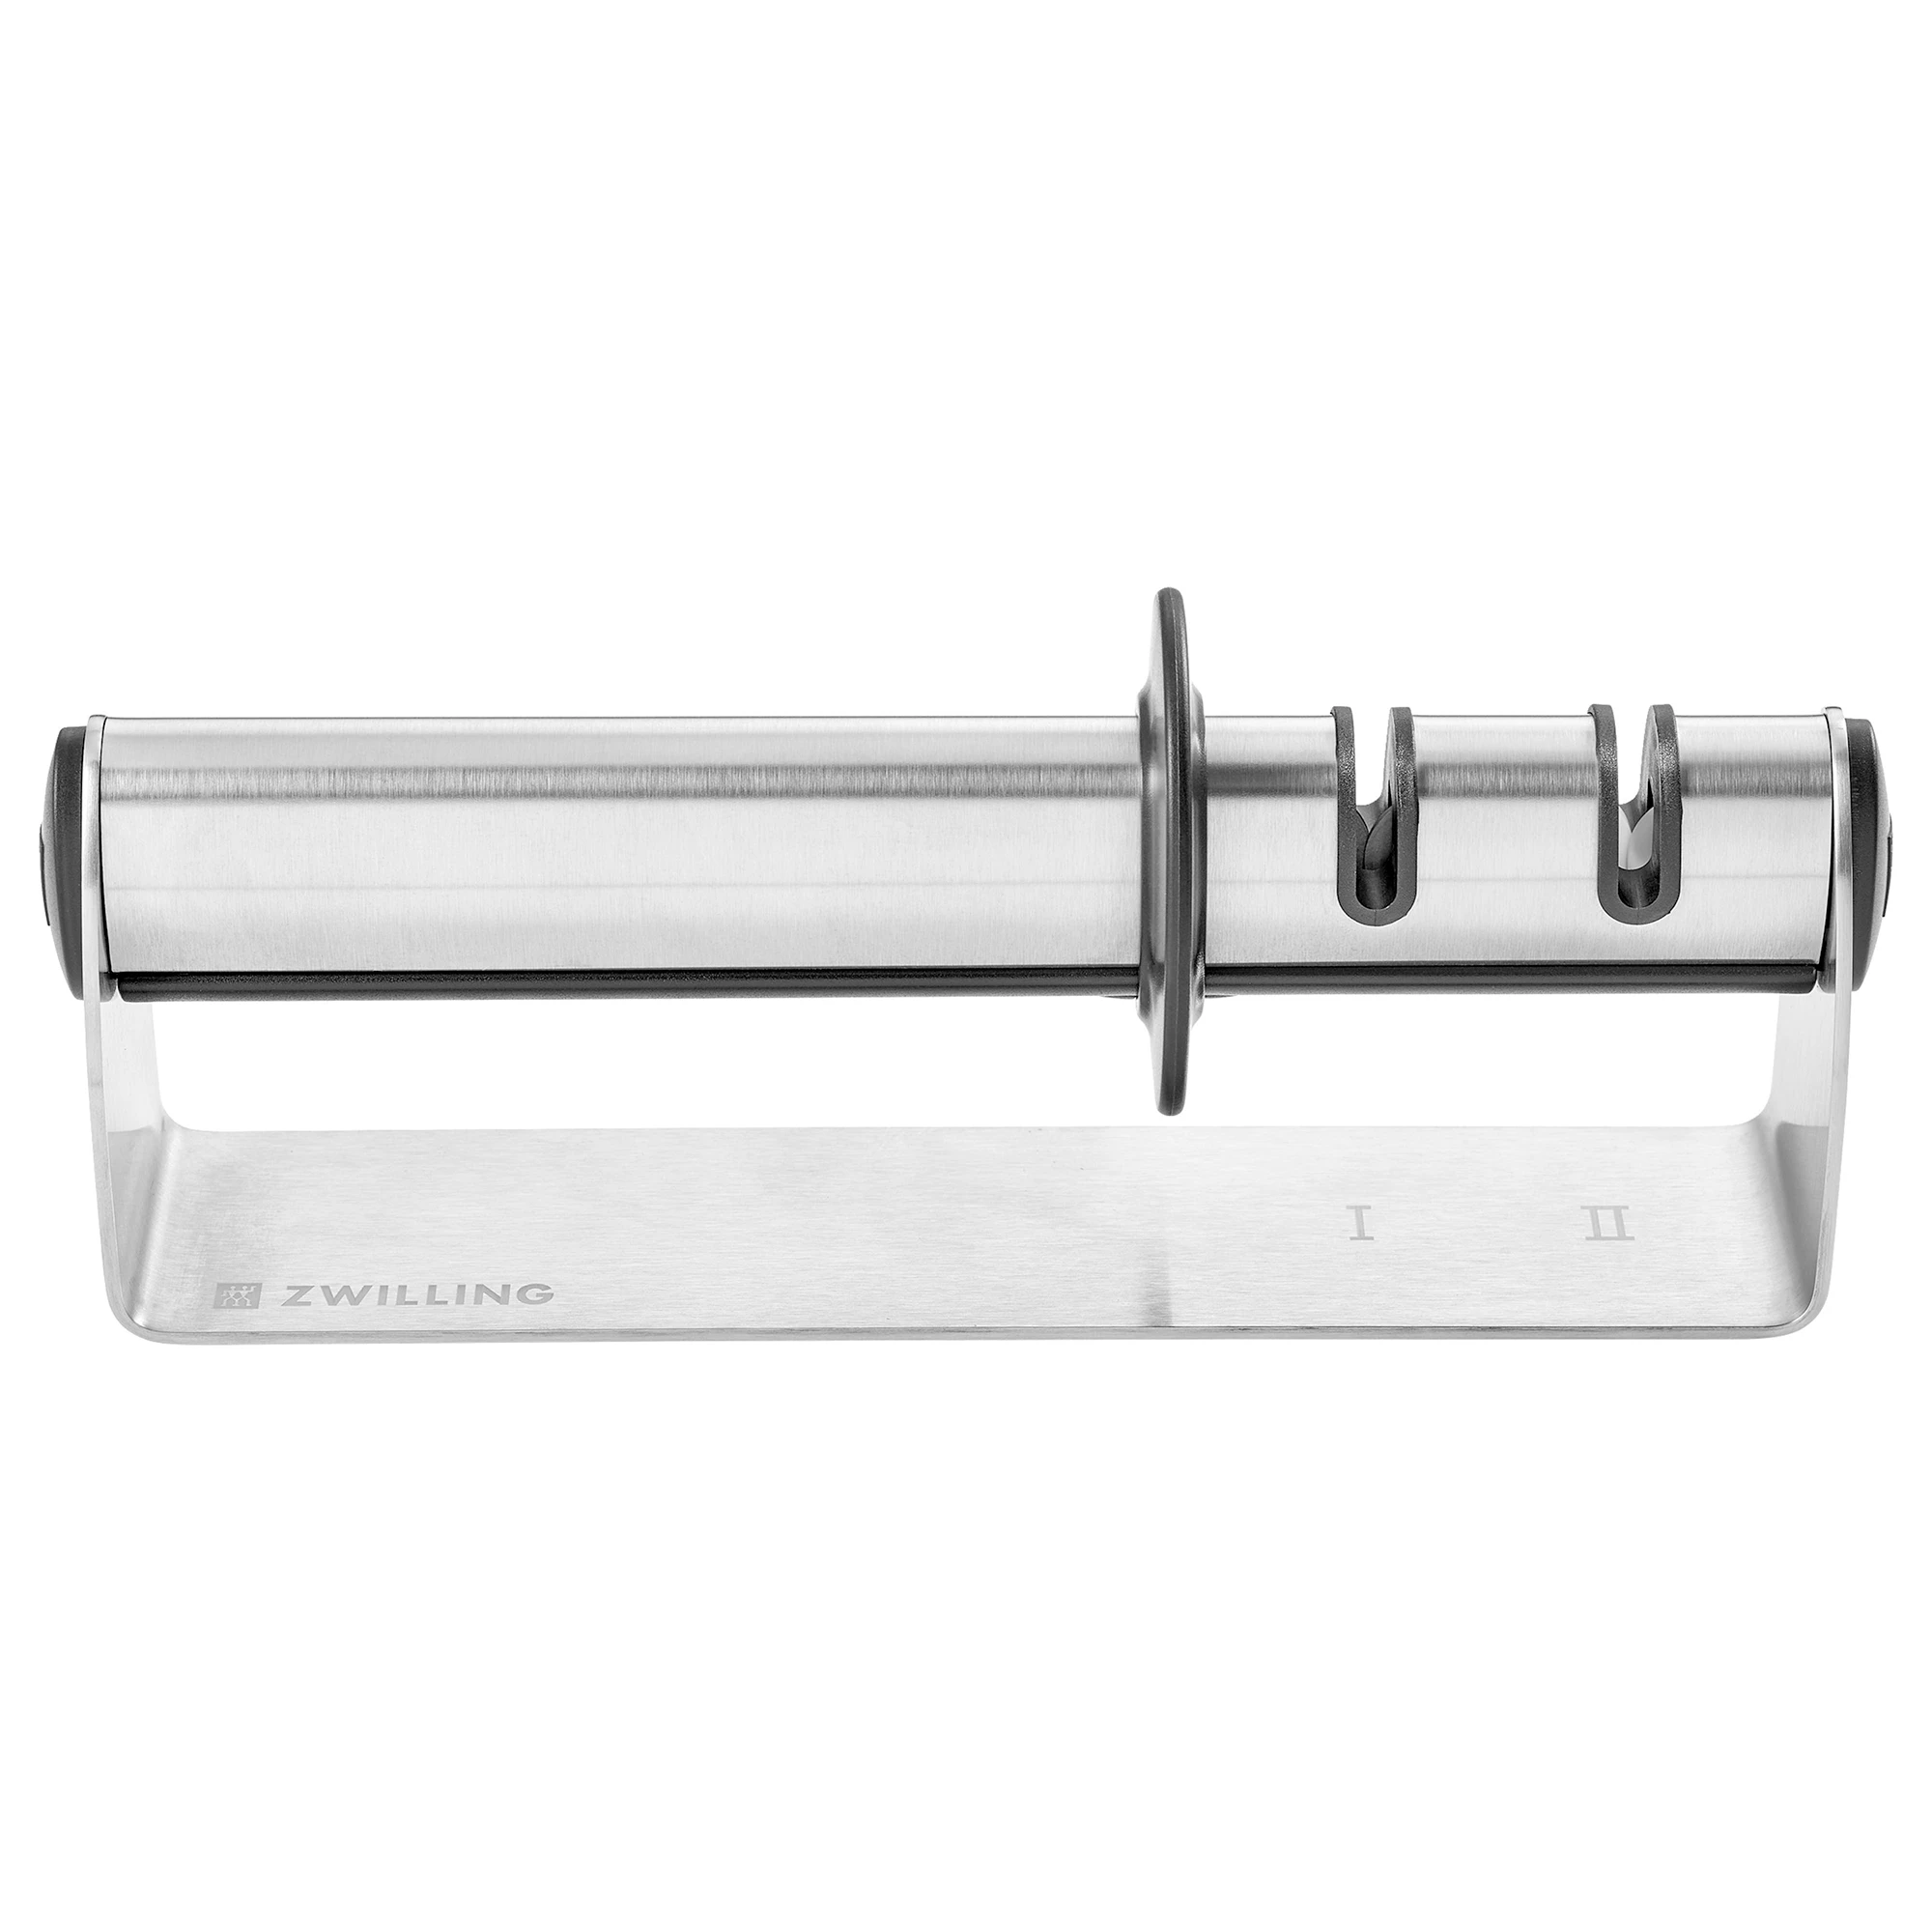 https://www.homethreads.com/files/zwilling/32601-003-zwilling-twinsharp-duo-stainless-steel-handheld-knife-sharpener.webp